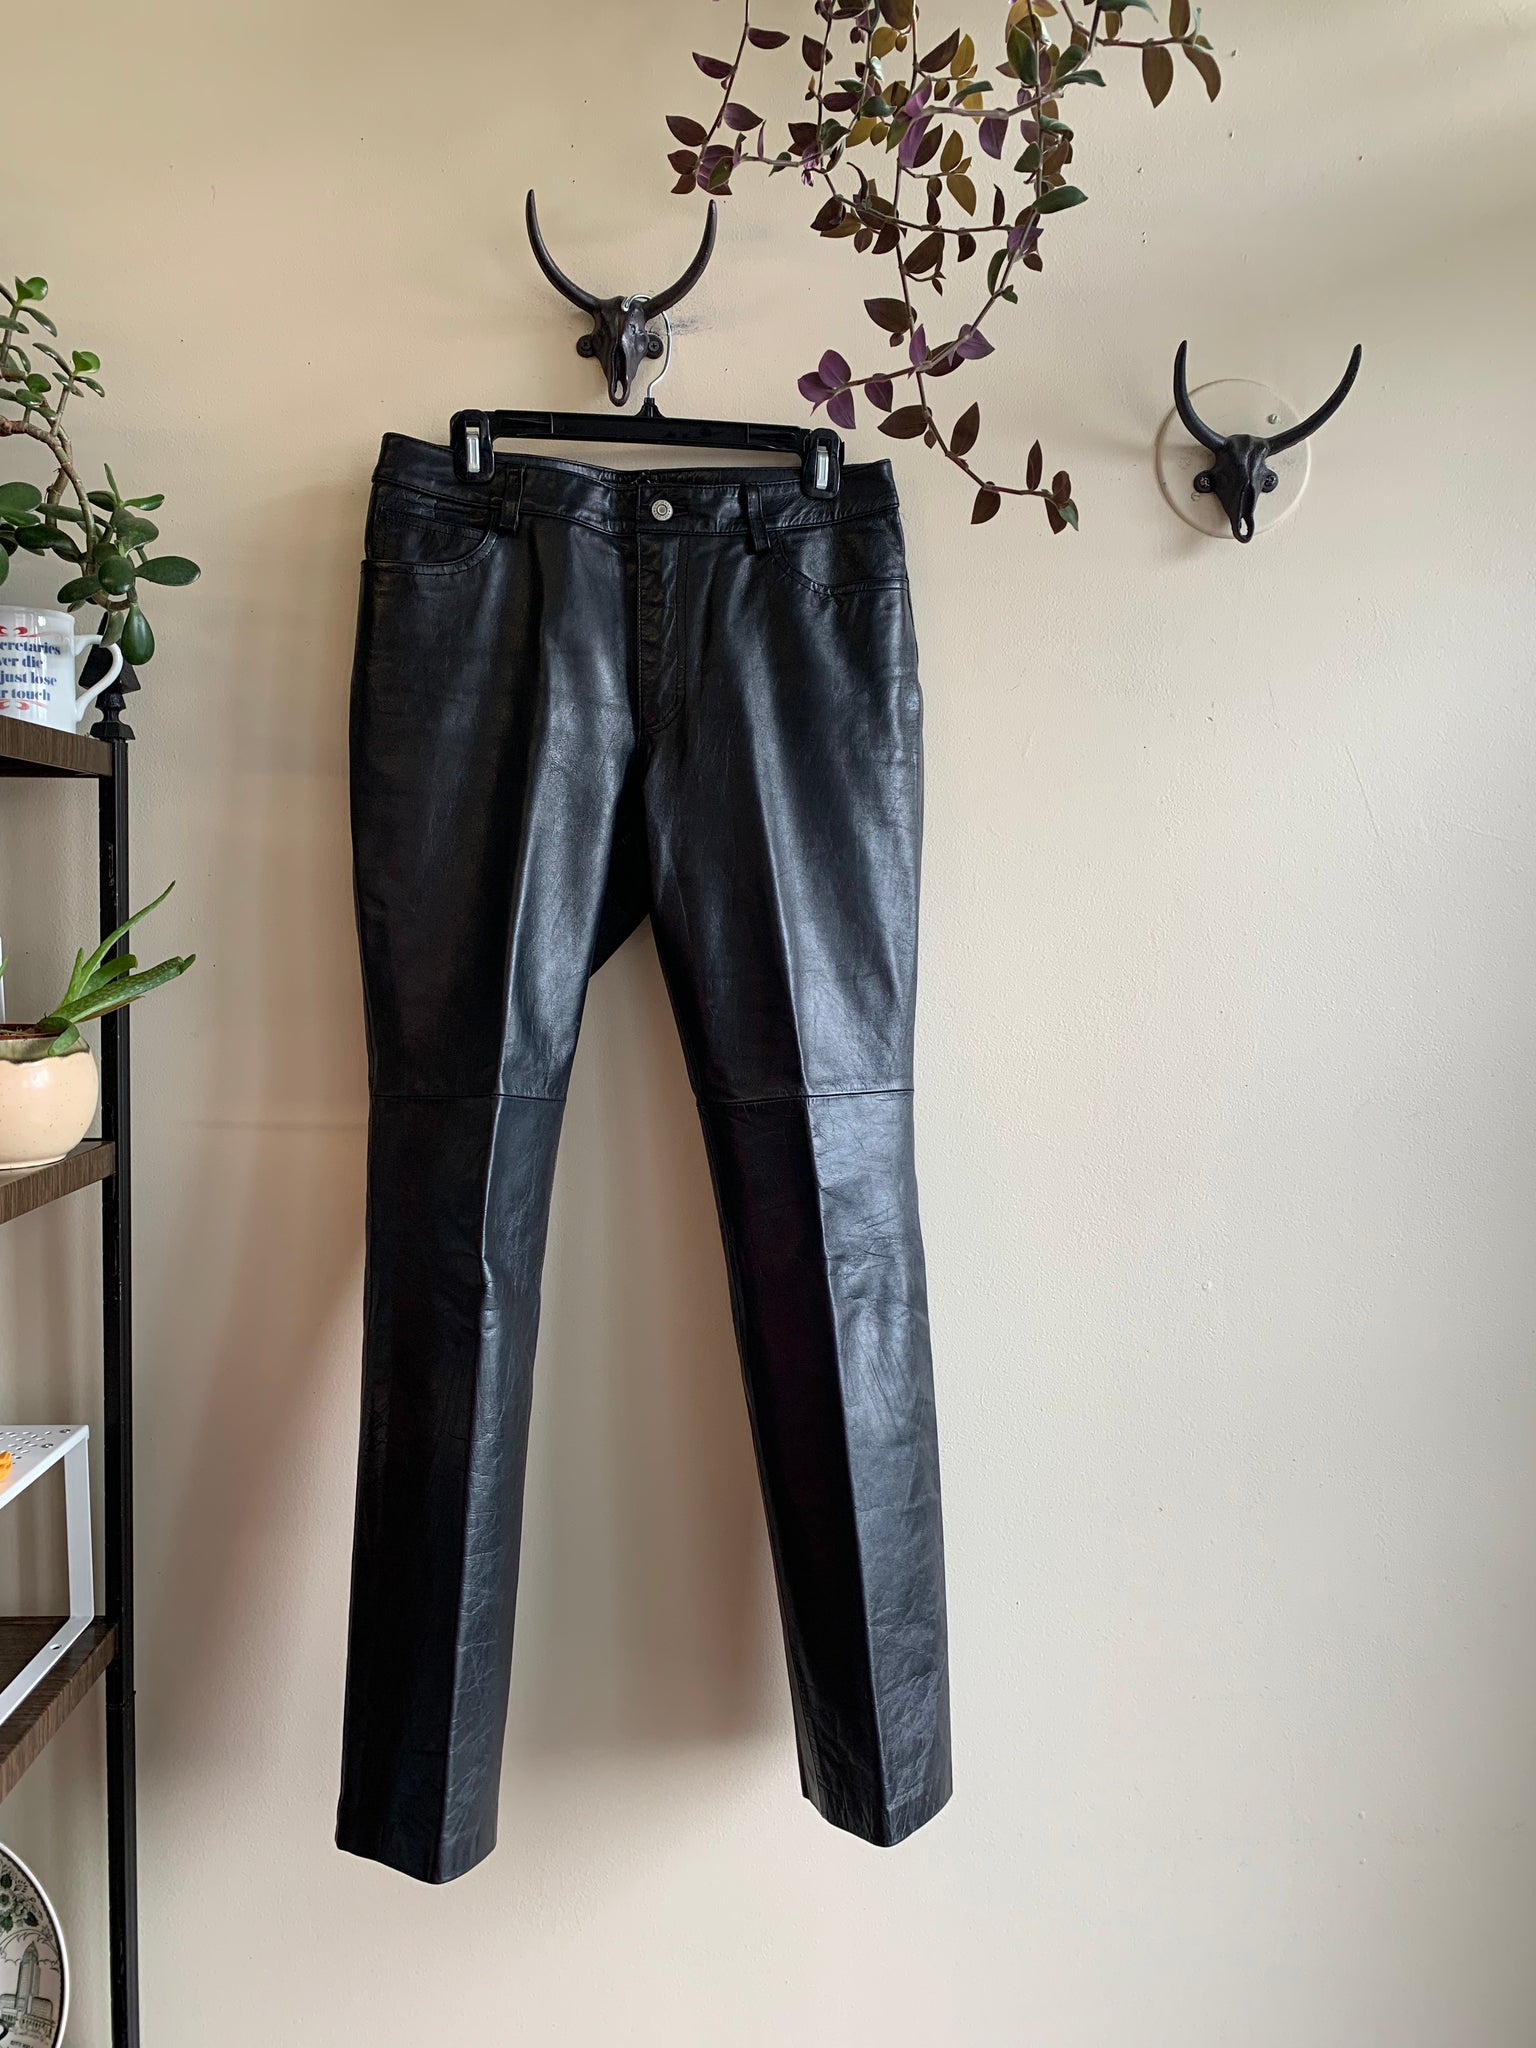 Black Leather Gap Pants - M